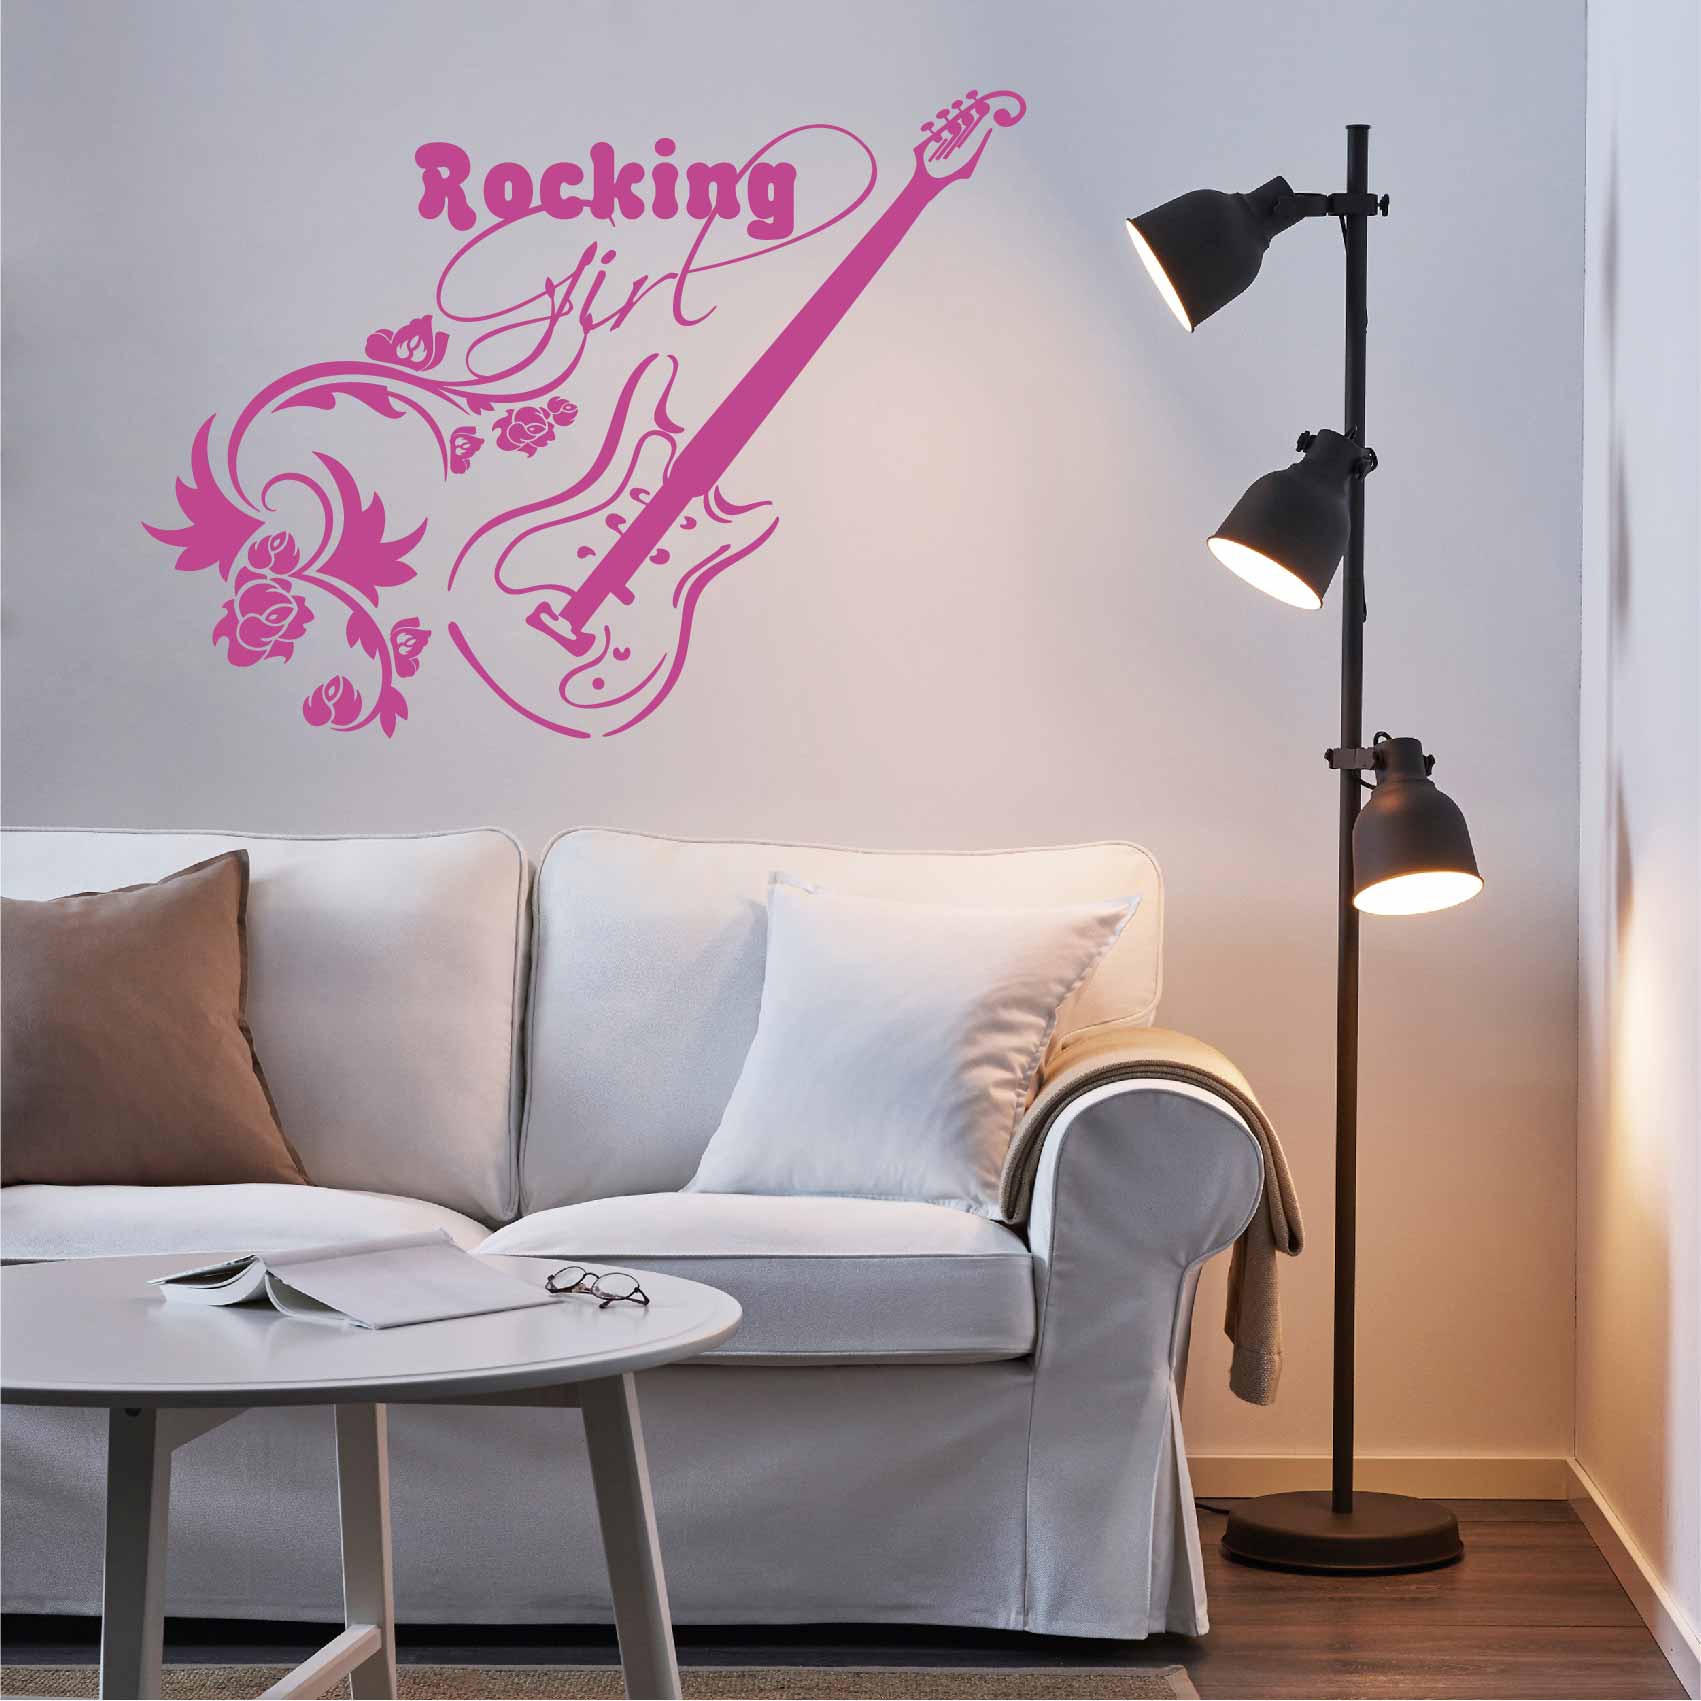 stickers-rocking-girl-ref43musique-autocollant-muraux-musique-sticker-mural-musical-note-notes-deco-salon-chambre-adulte-ado-enfant